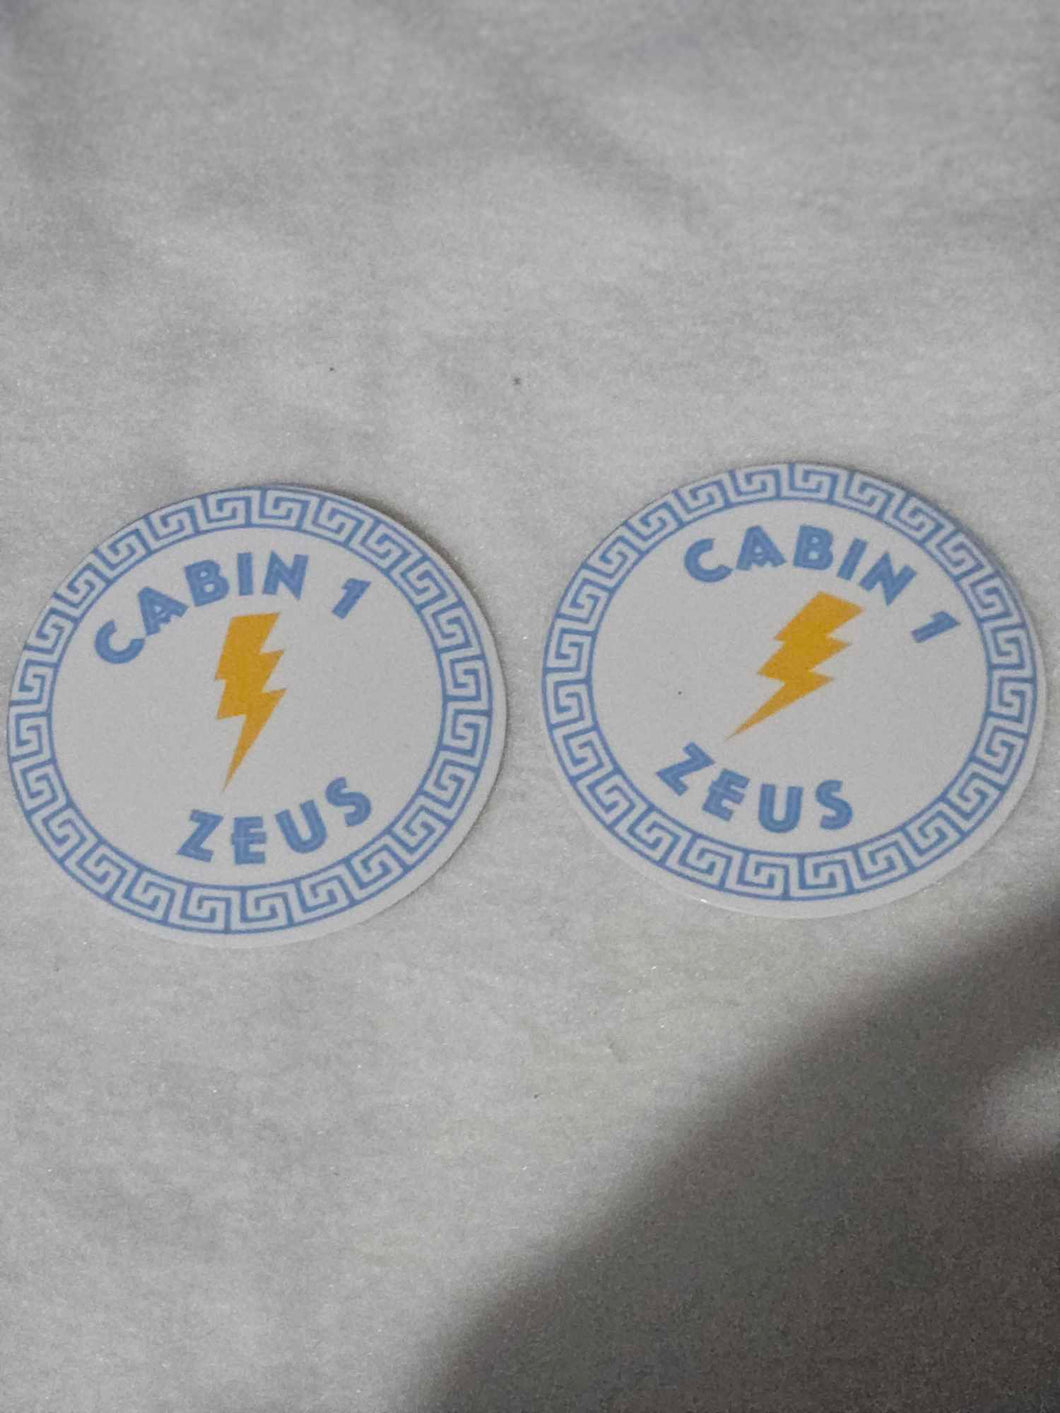 Percy Jackson Cabnin - Camp Half Blood Cabins | Stickers